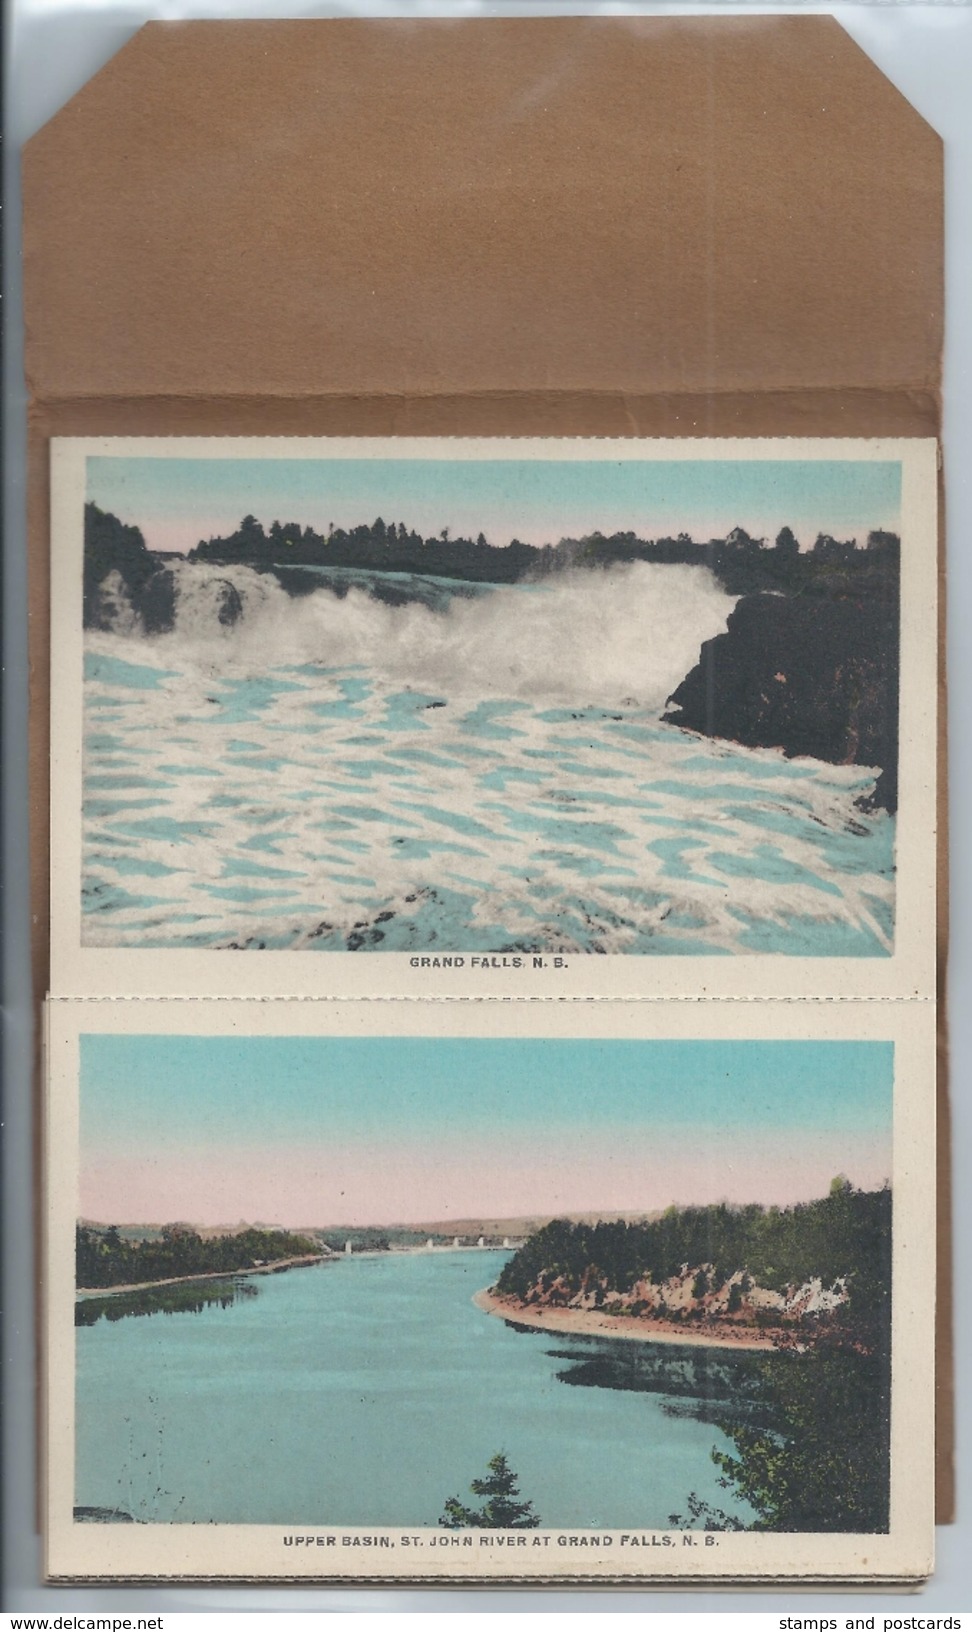 GRAND FALLS, N.B. CANADA. C. 1920 POSTCARD FOLDER - 10 POSTCARDS #553. - Grand Falls